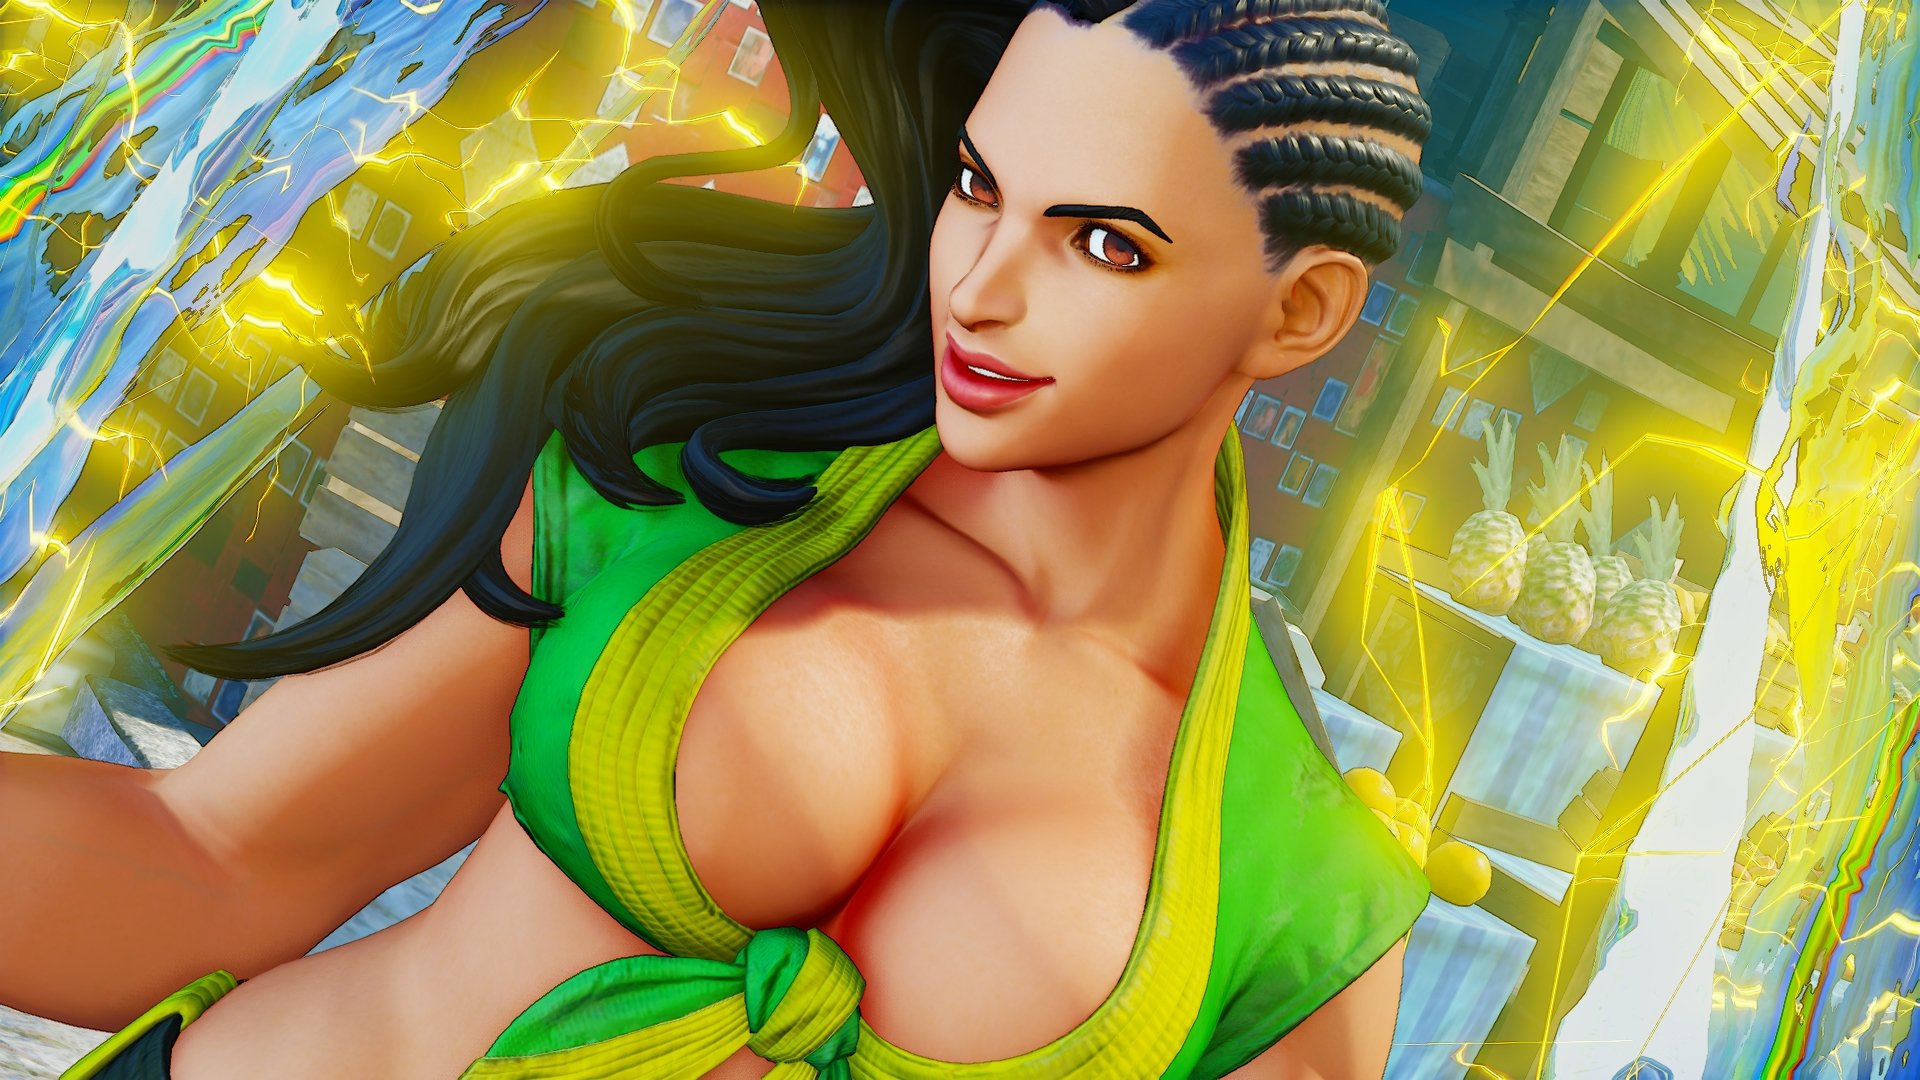 Street Fighter V Laura gets leaked